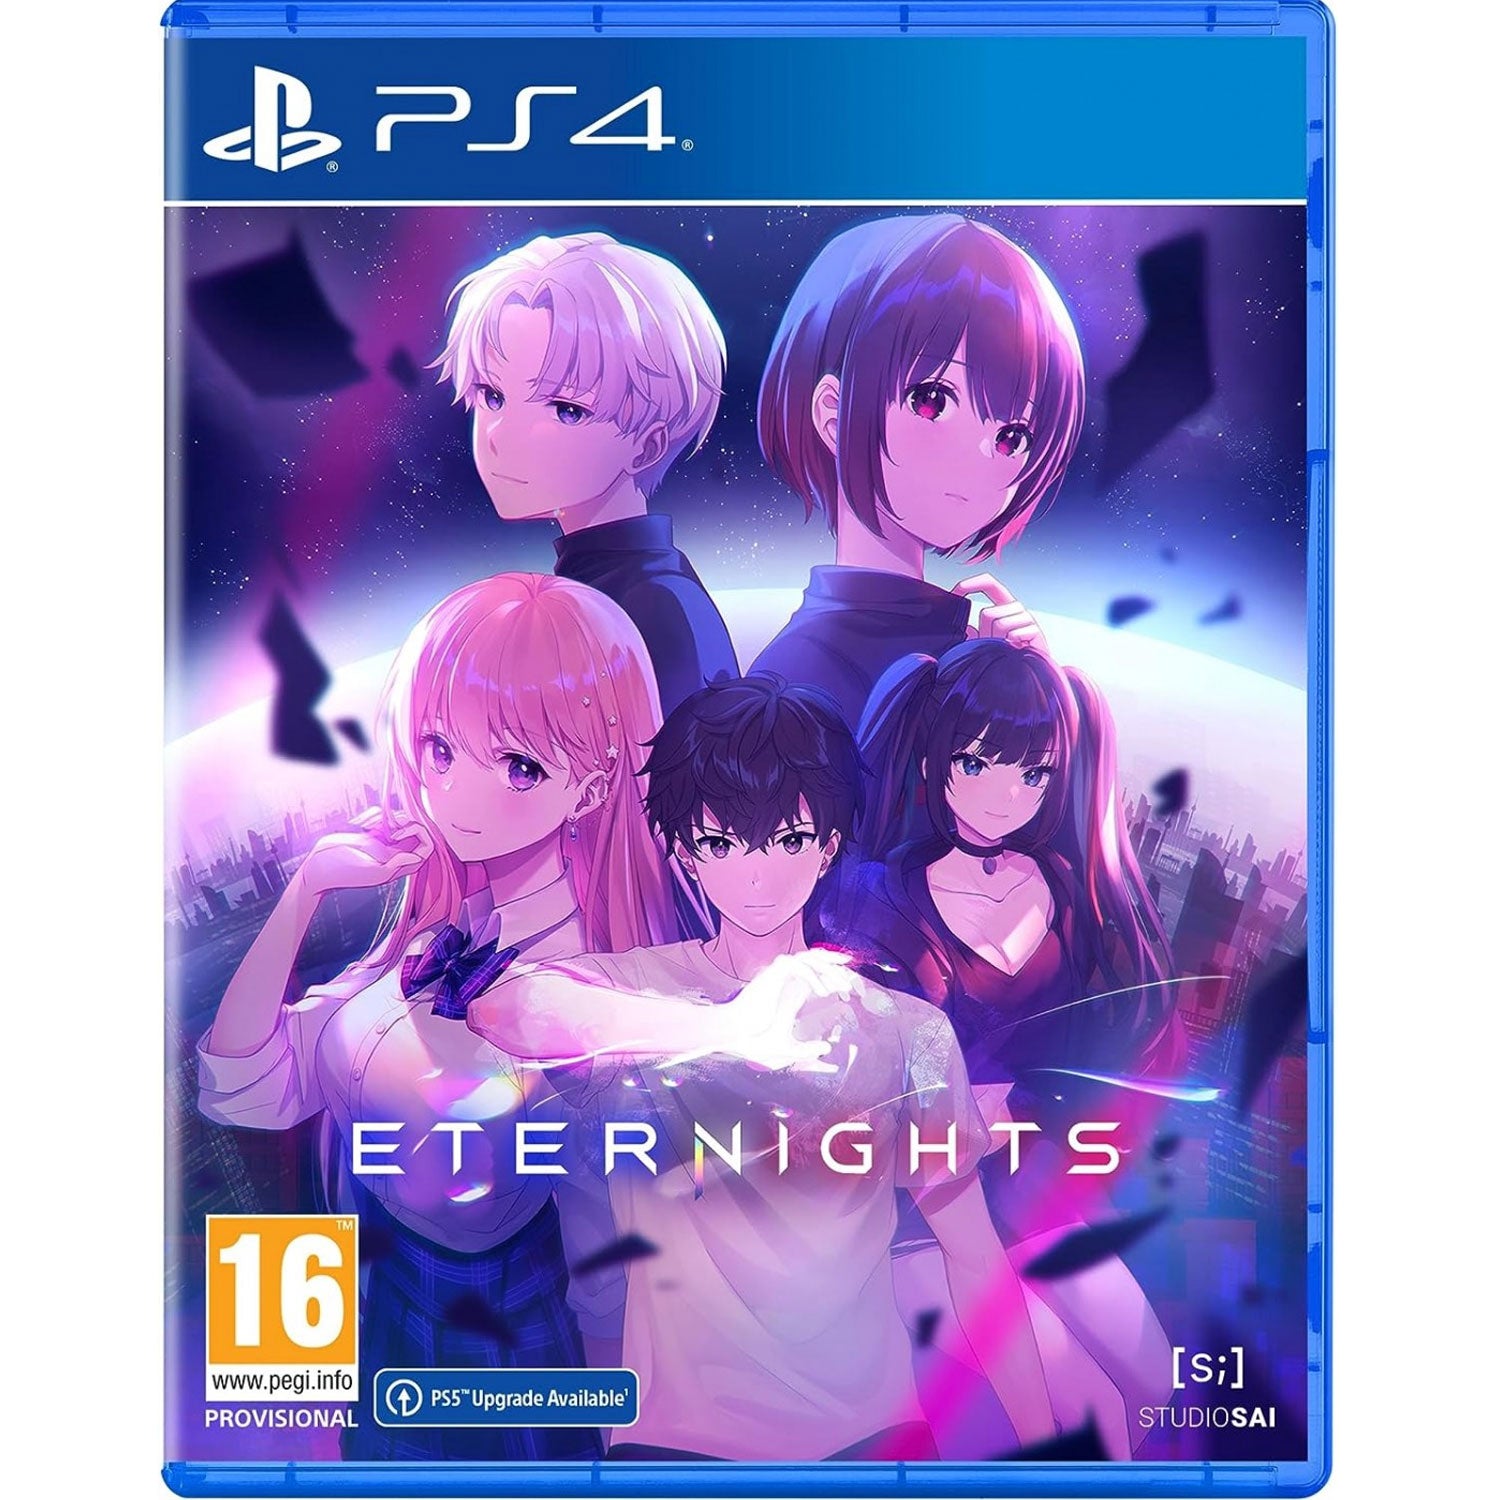 PS4 Eternights